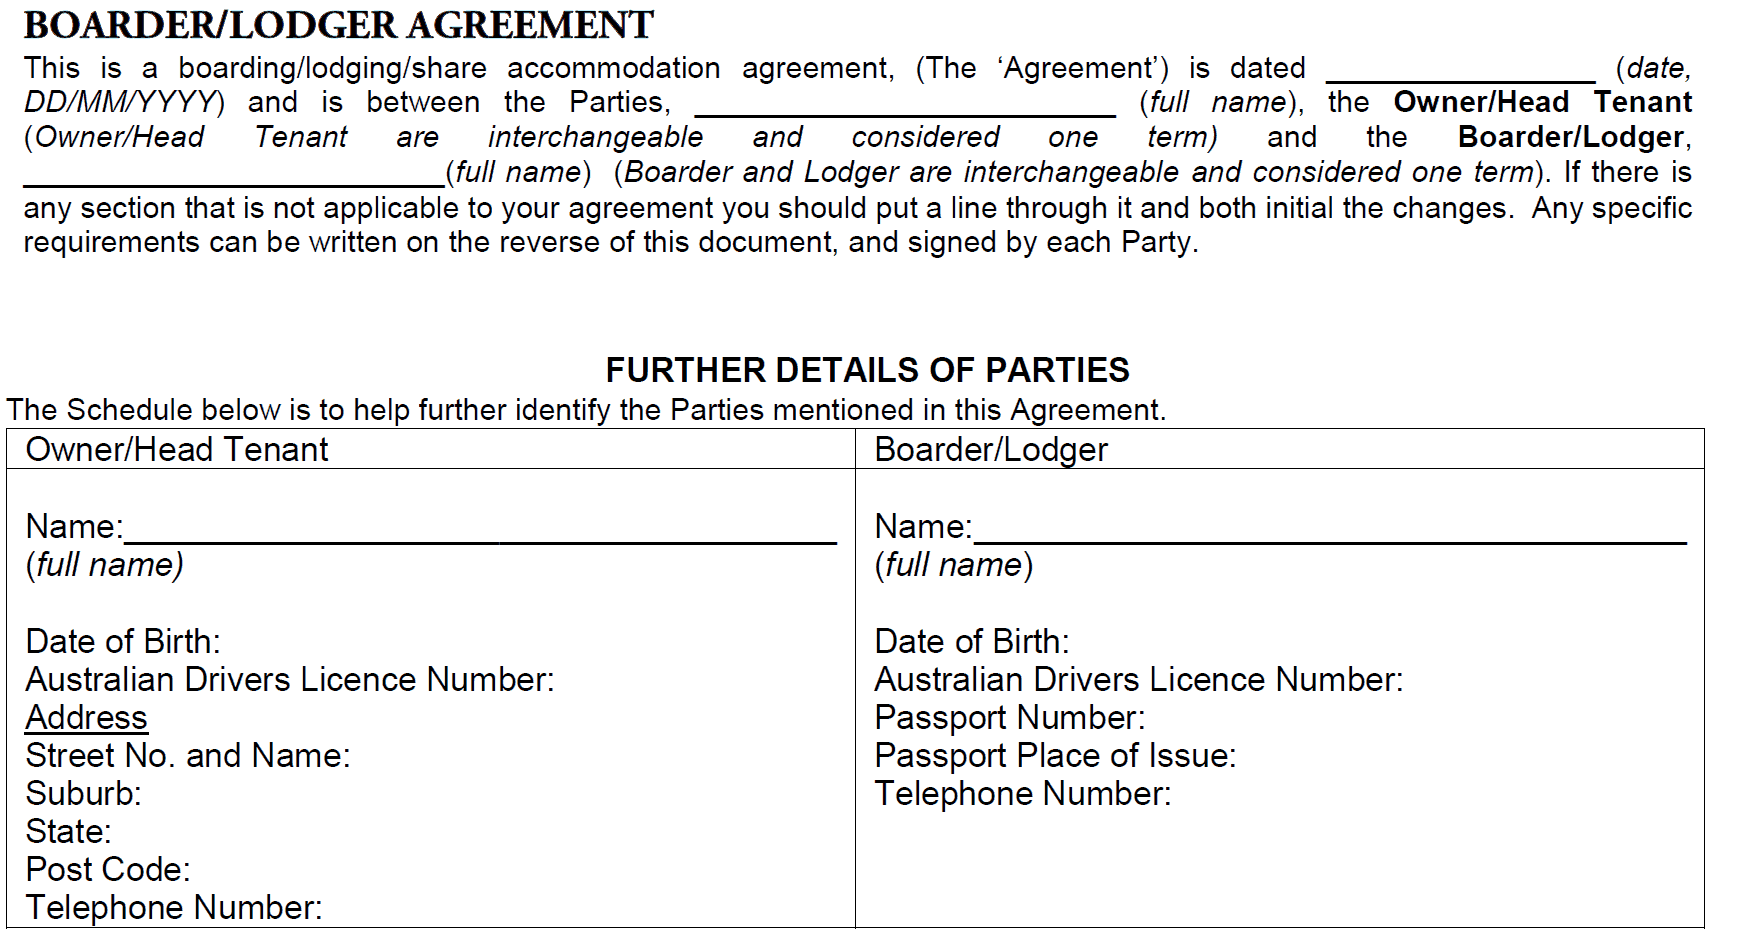 Border Lodger Agreement